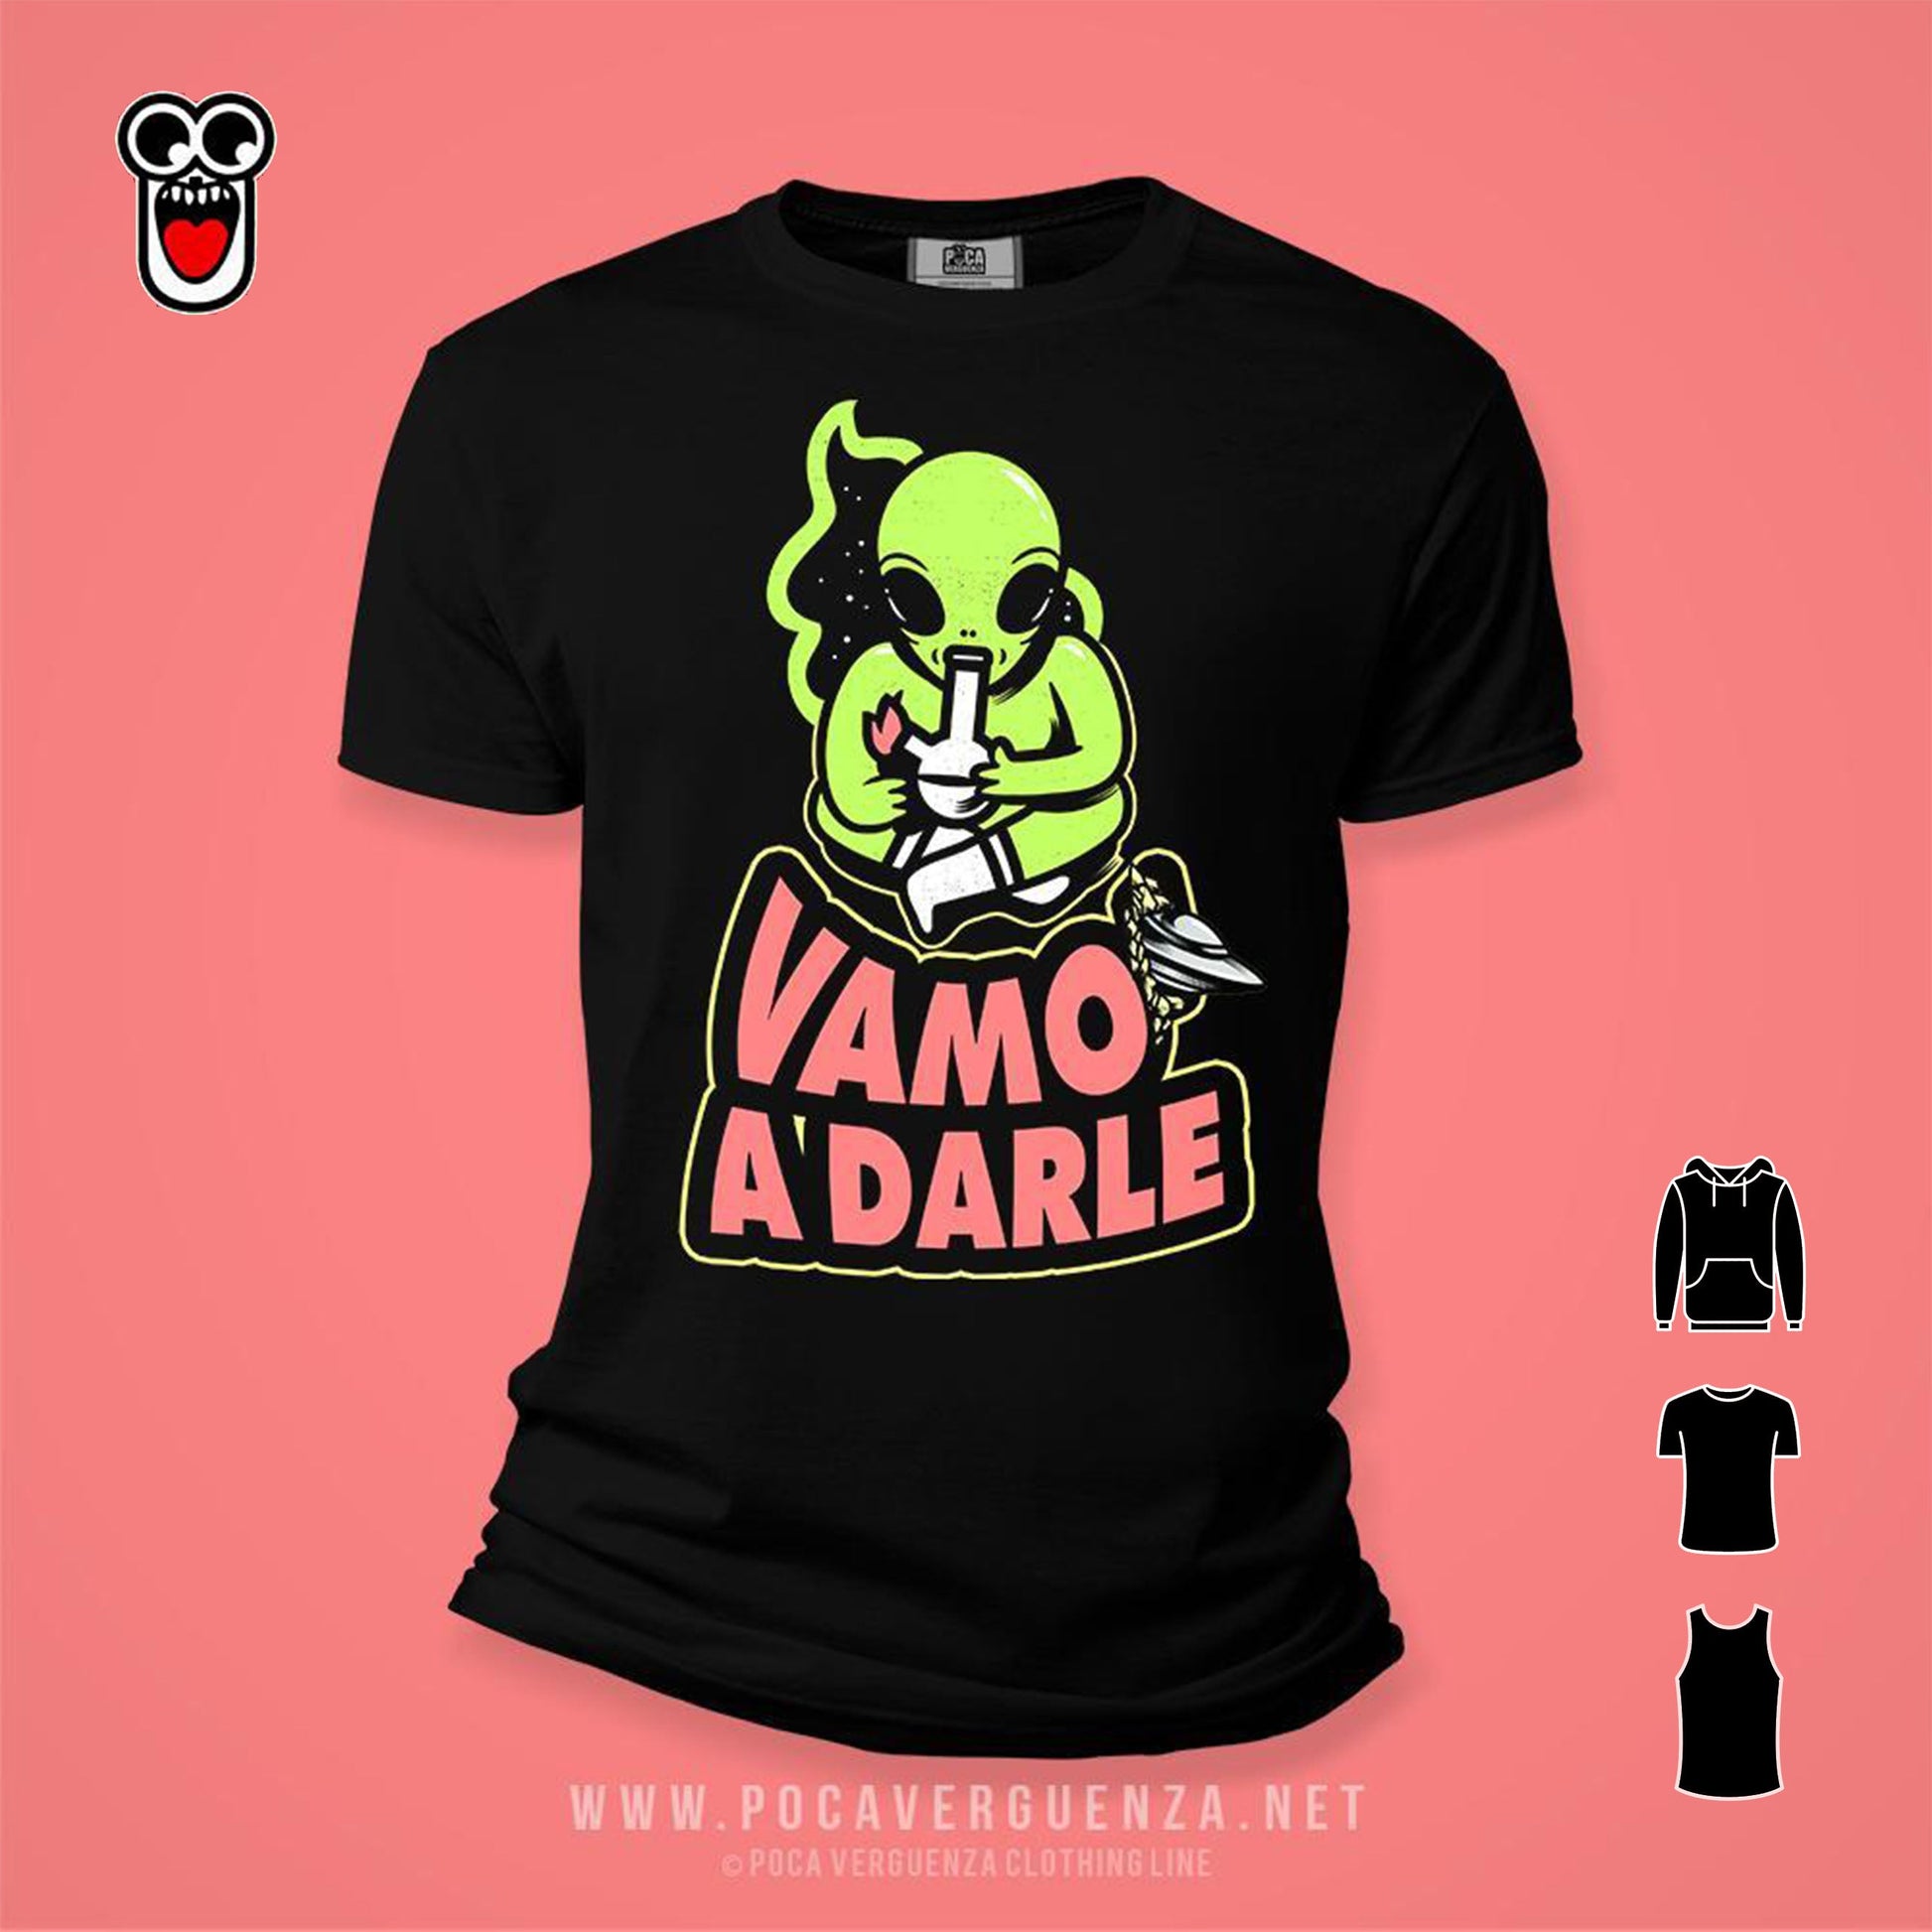 Vamo' Darle pocaverguenza Camisetas (5692054995103)